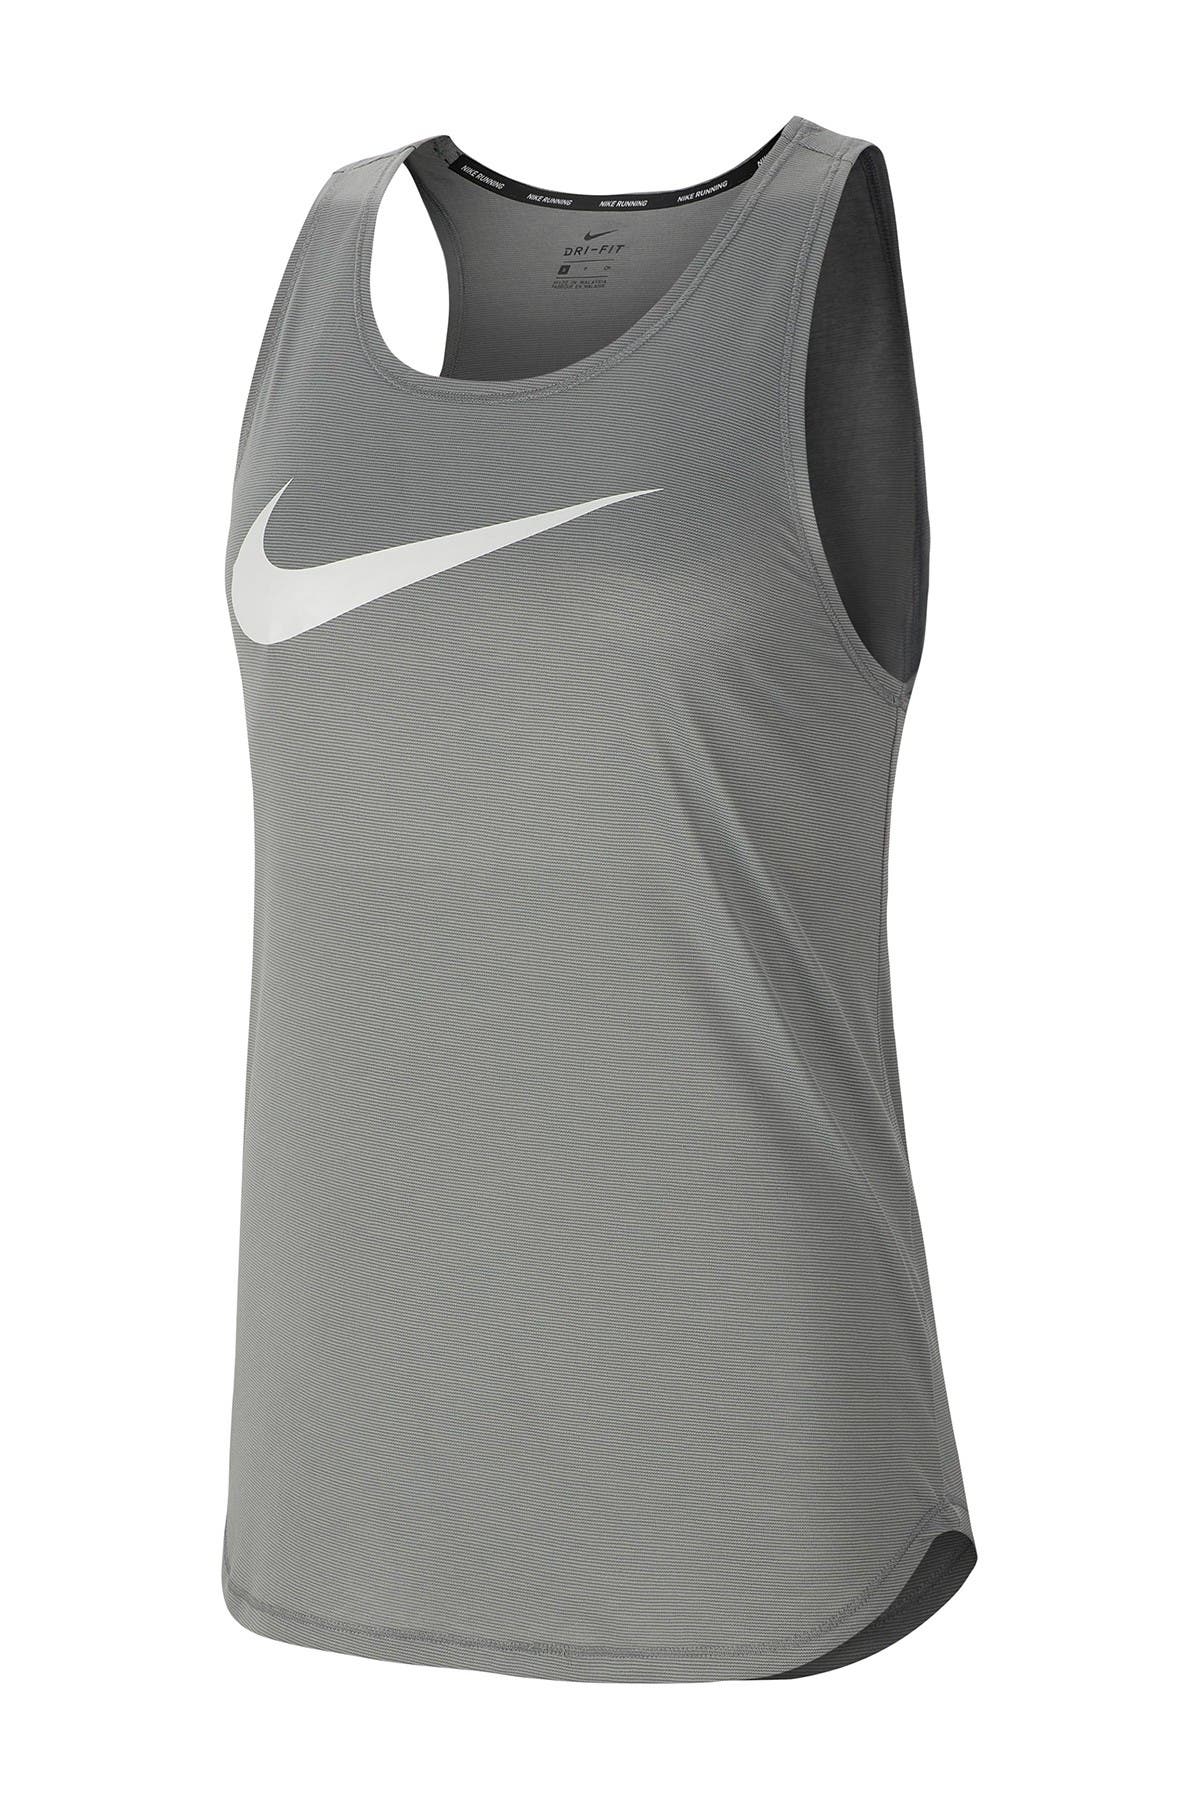 Nike | Swoosh Dri-FIT Running Tank Top | Nordstrom Rack